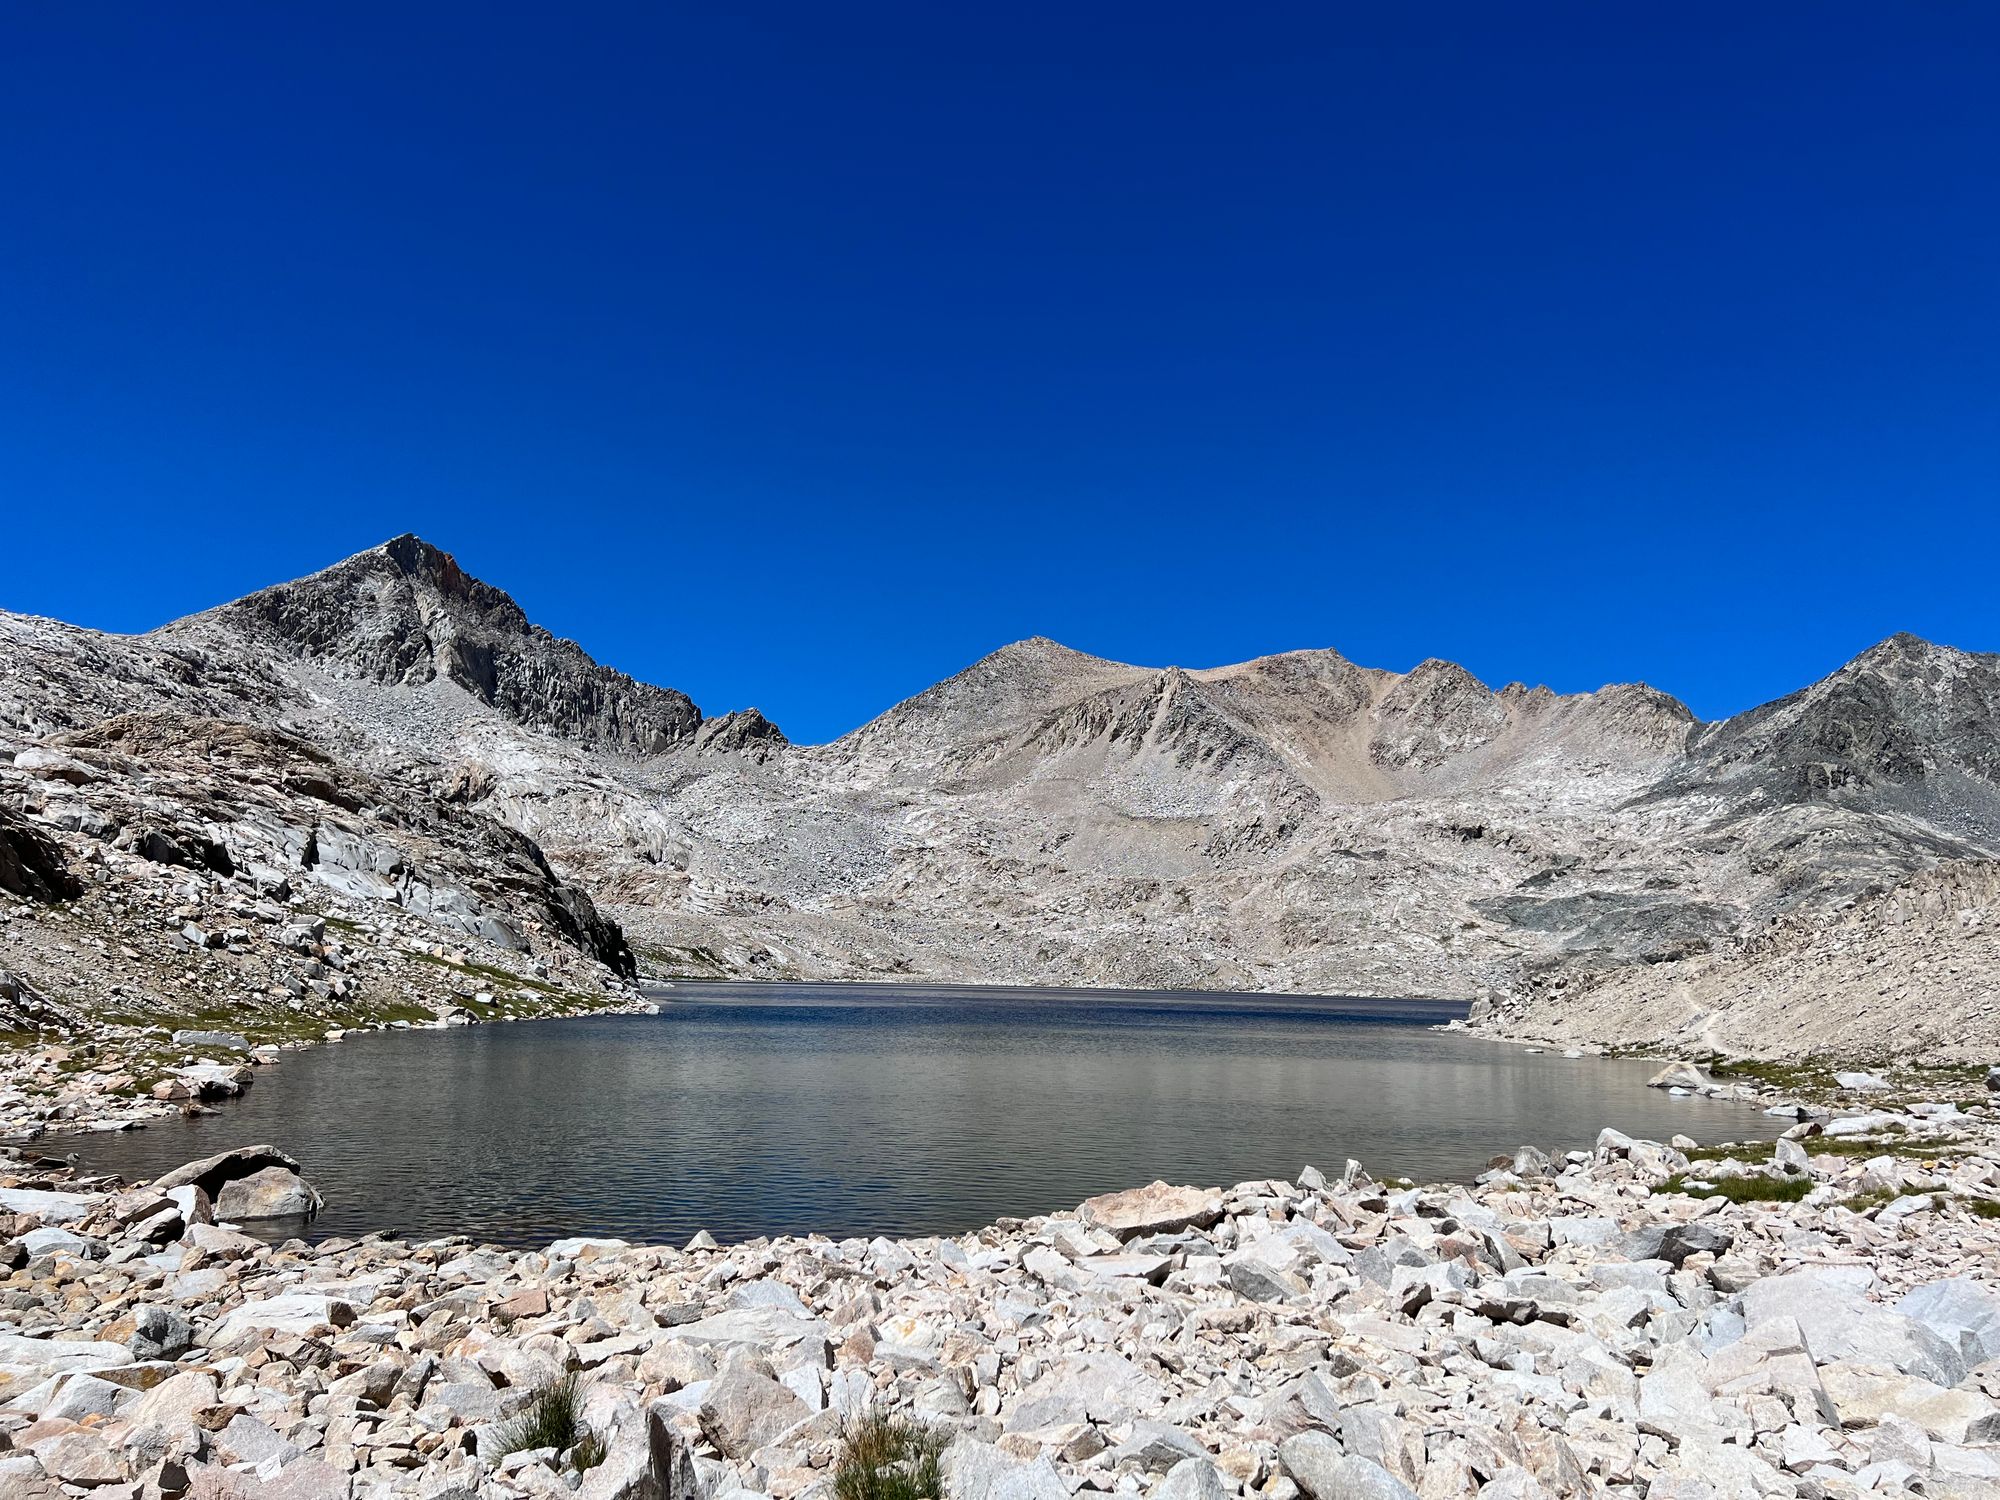 A deep-blue lake nestled between mountains.